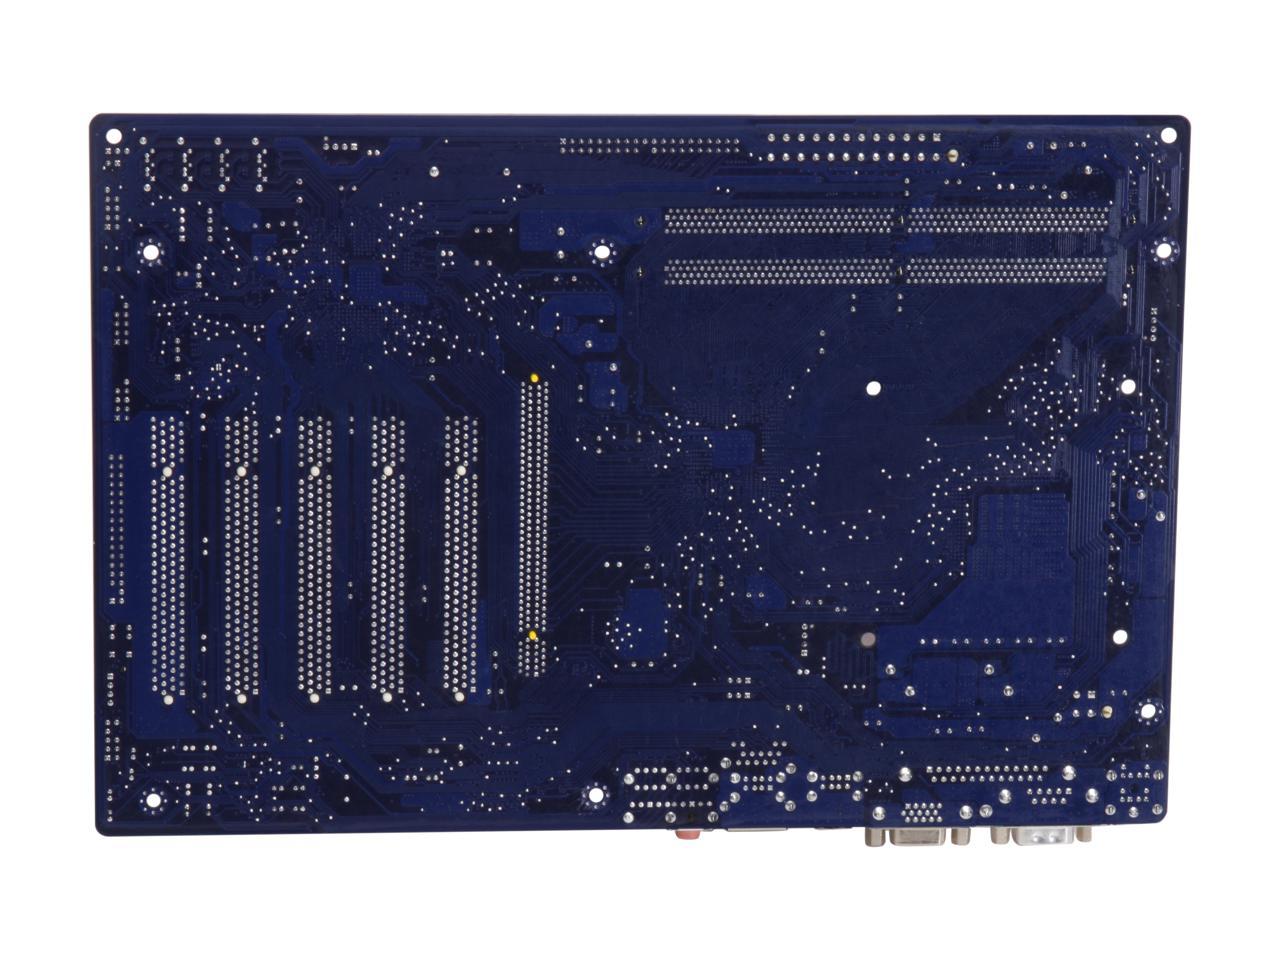 Foxconn G31AX-K LGA 775 ATX Intel Motherboard - Newegg.com